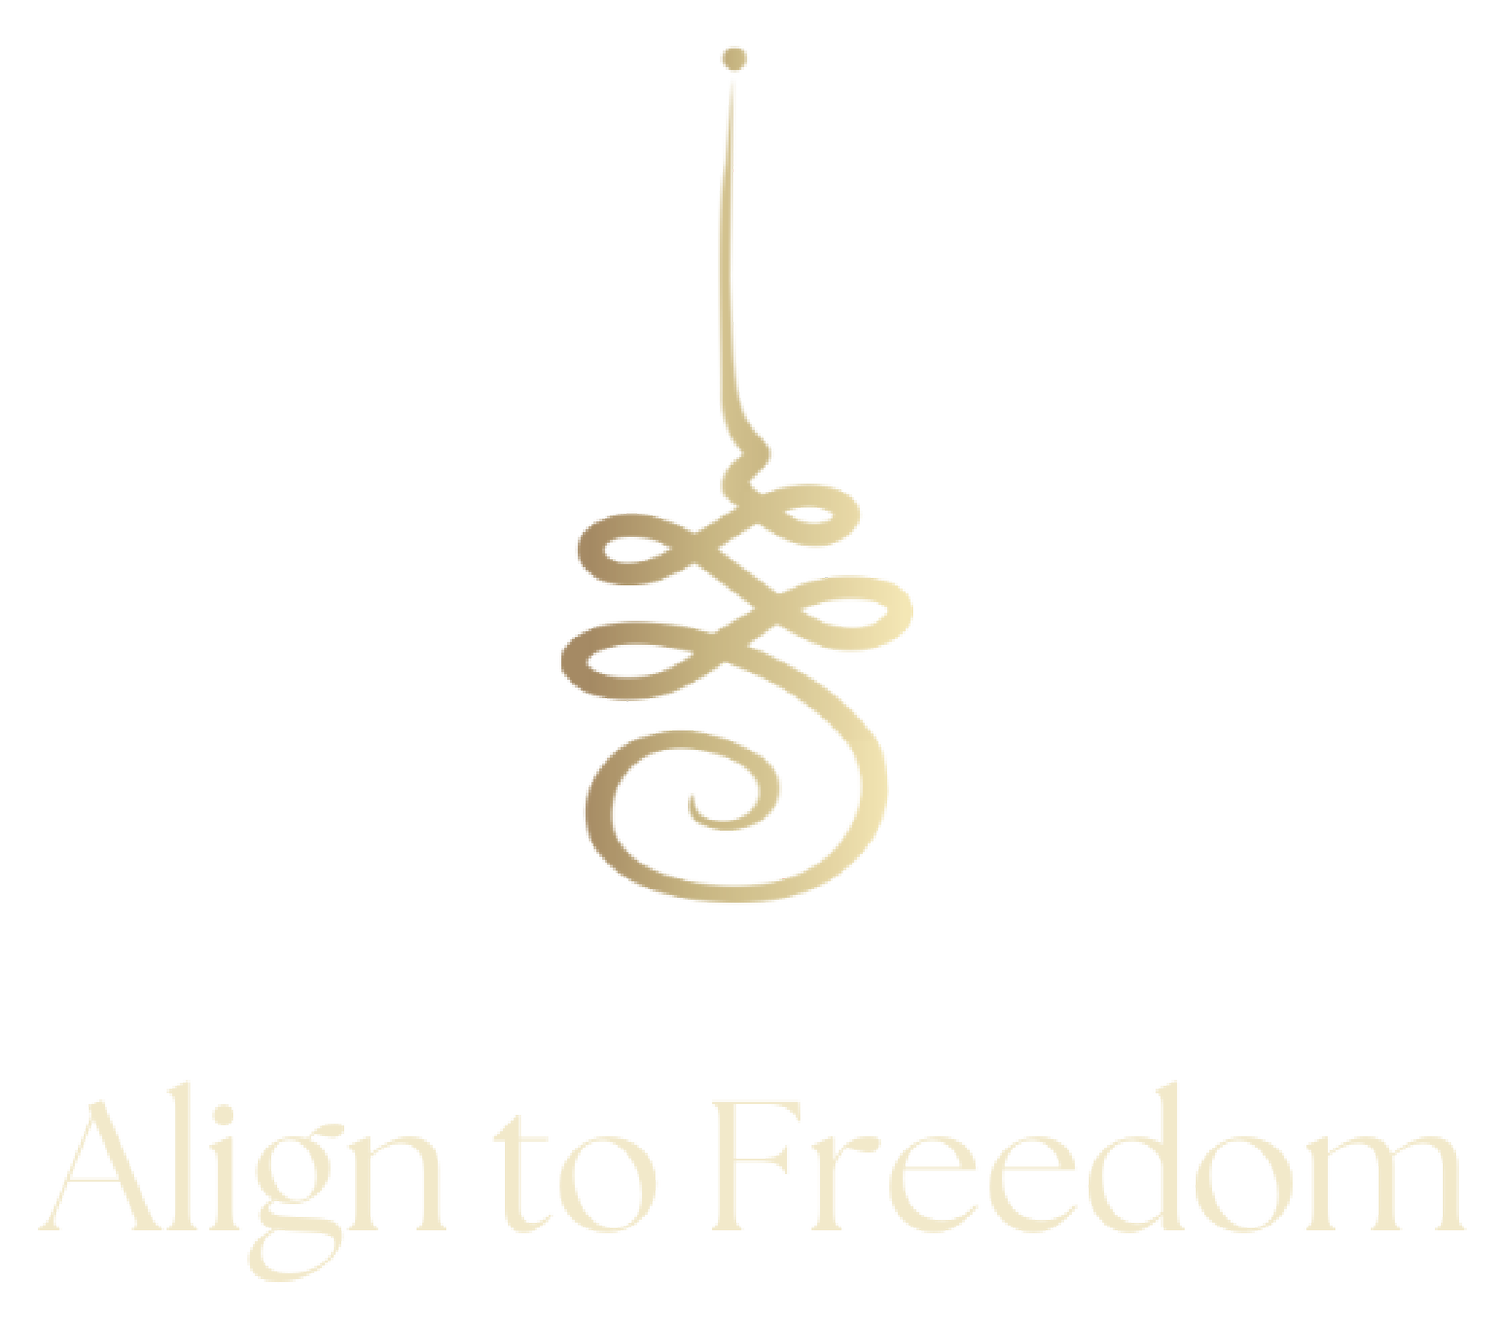 Align to Freedom